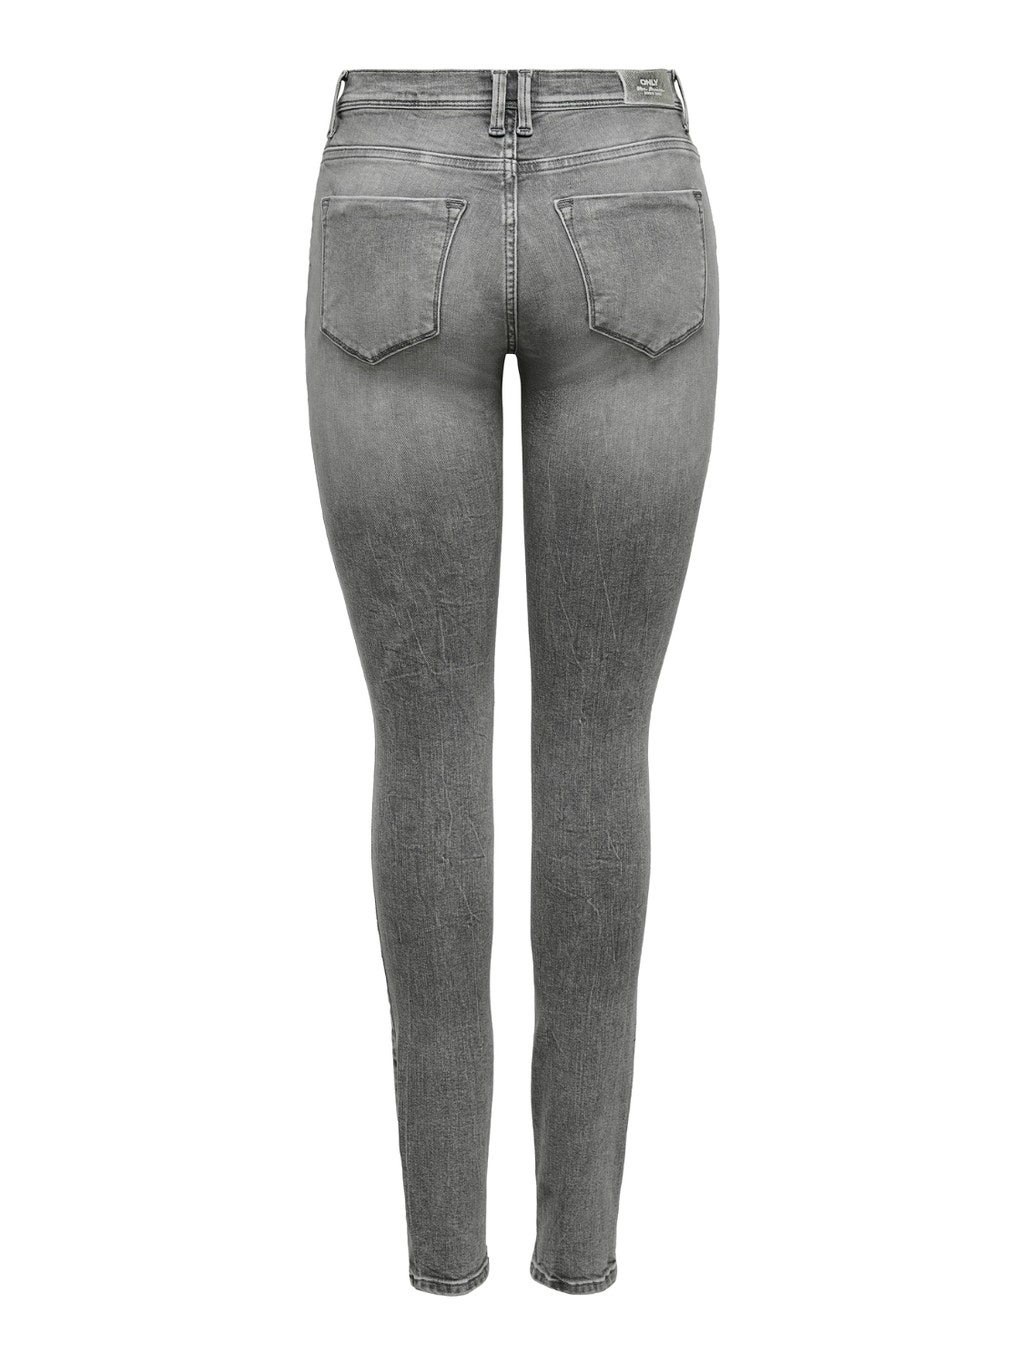 ONLShape life reg Skinny fit jeans | Medium Grey | ONLY®